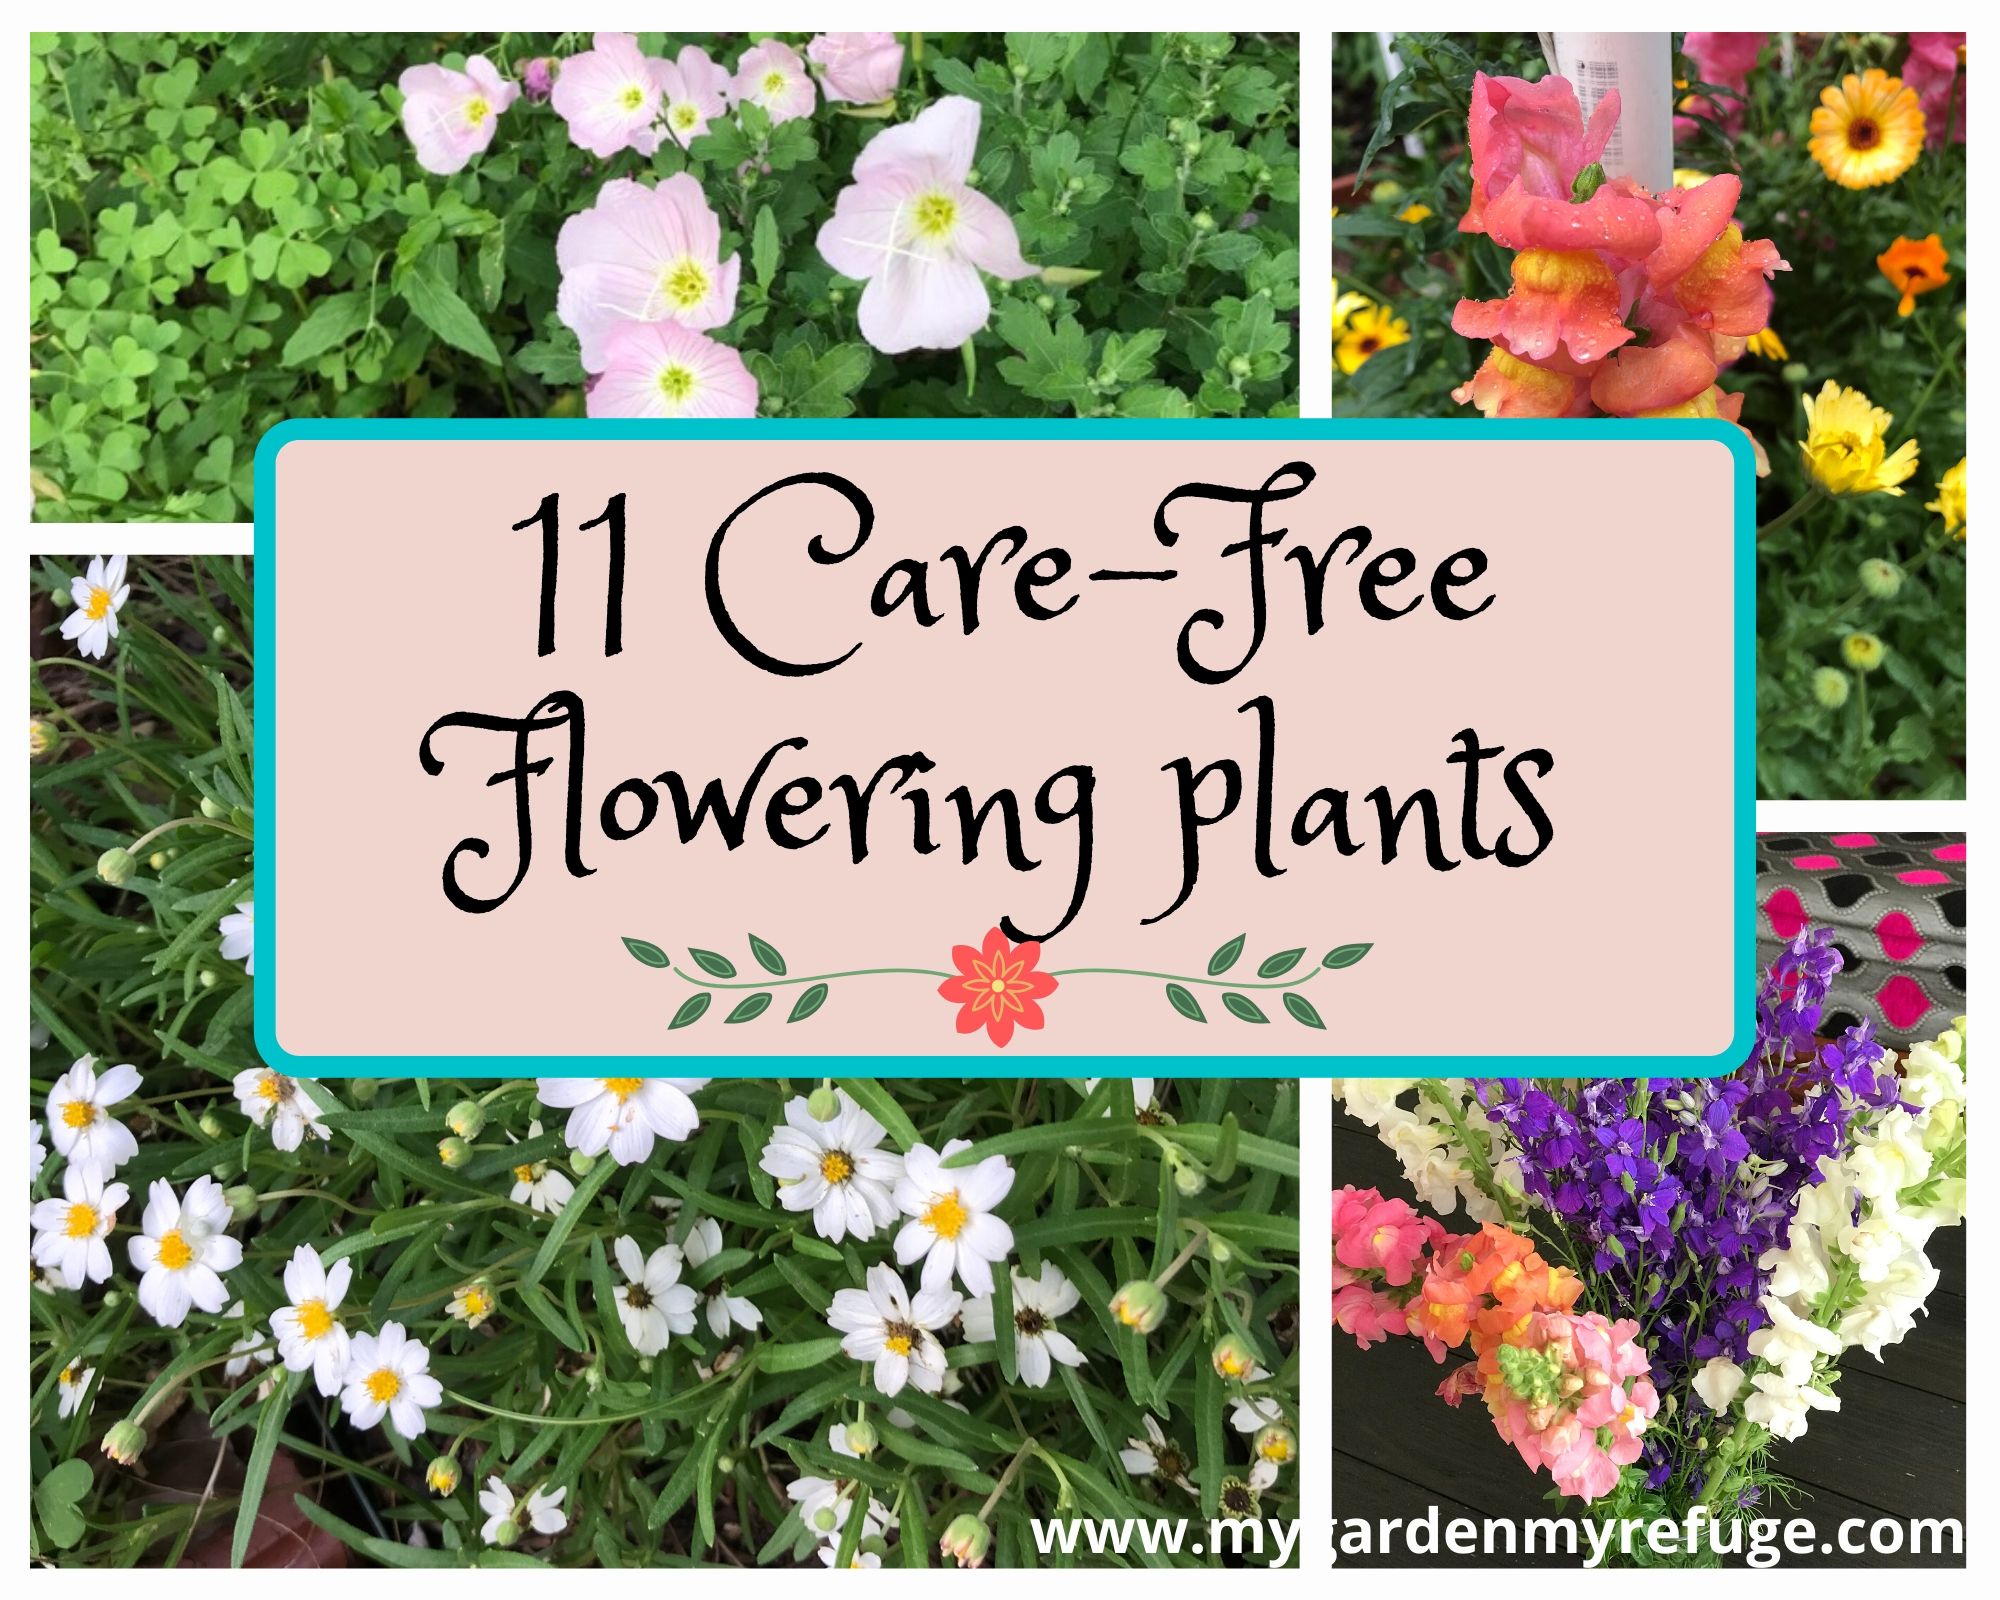 care-free flowering plants